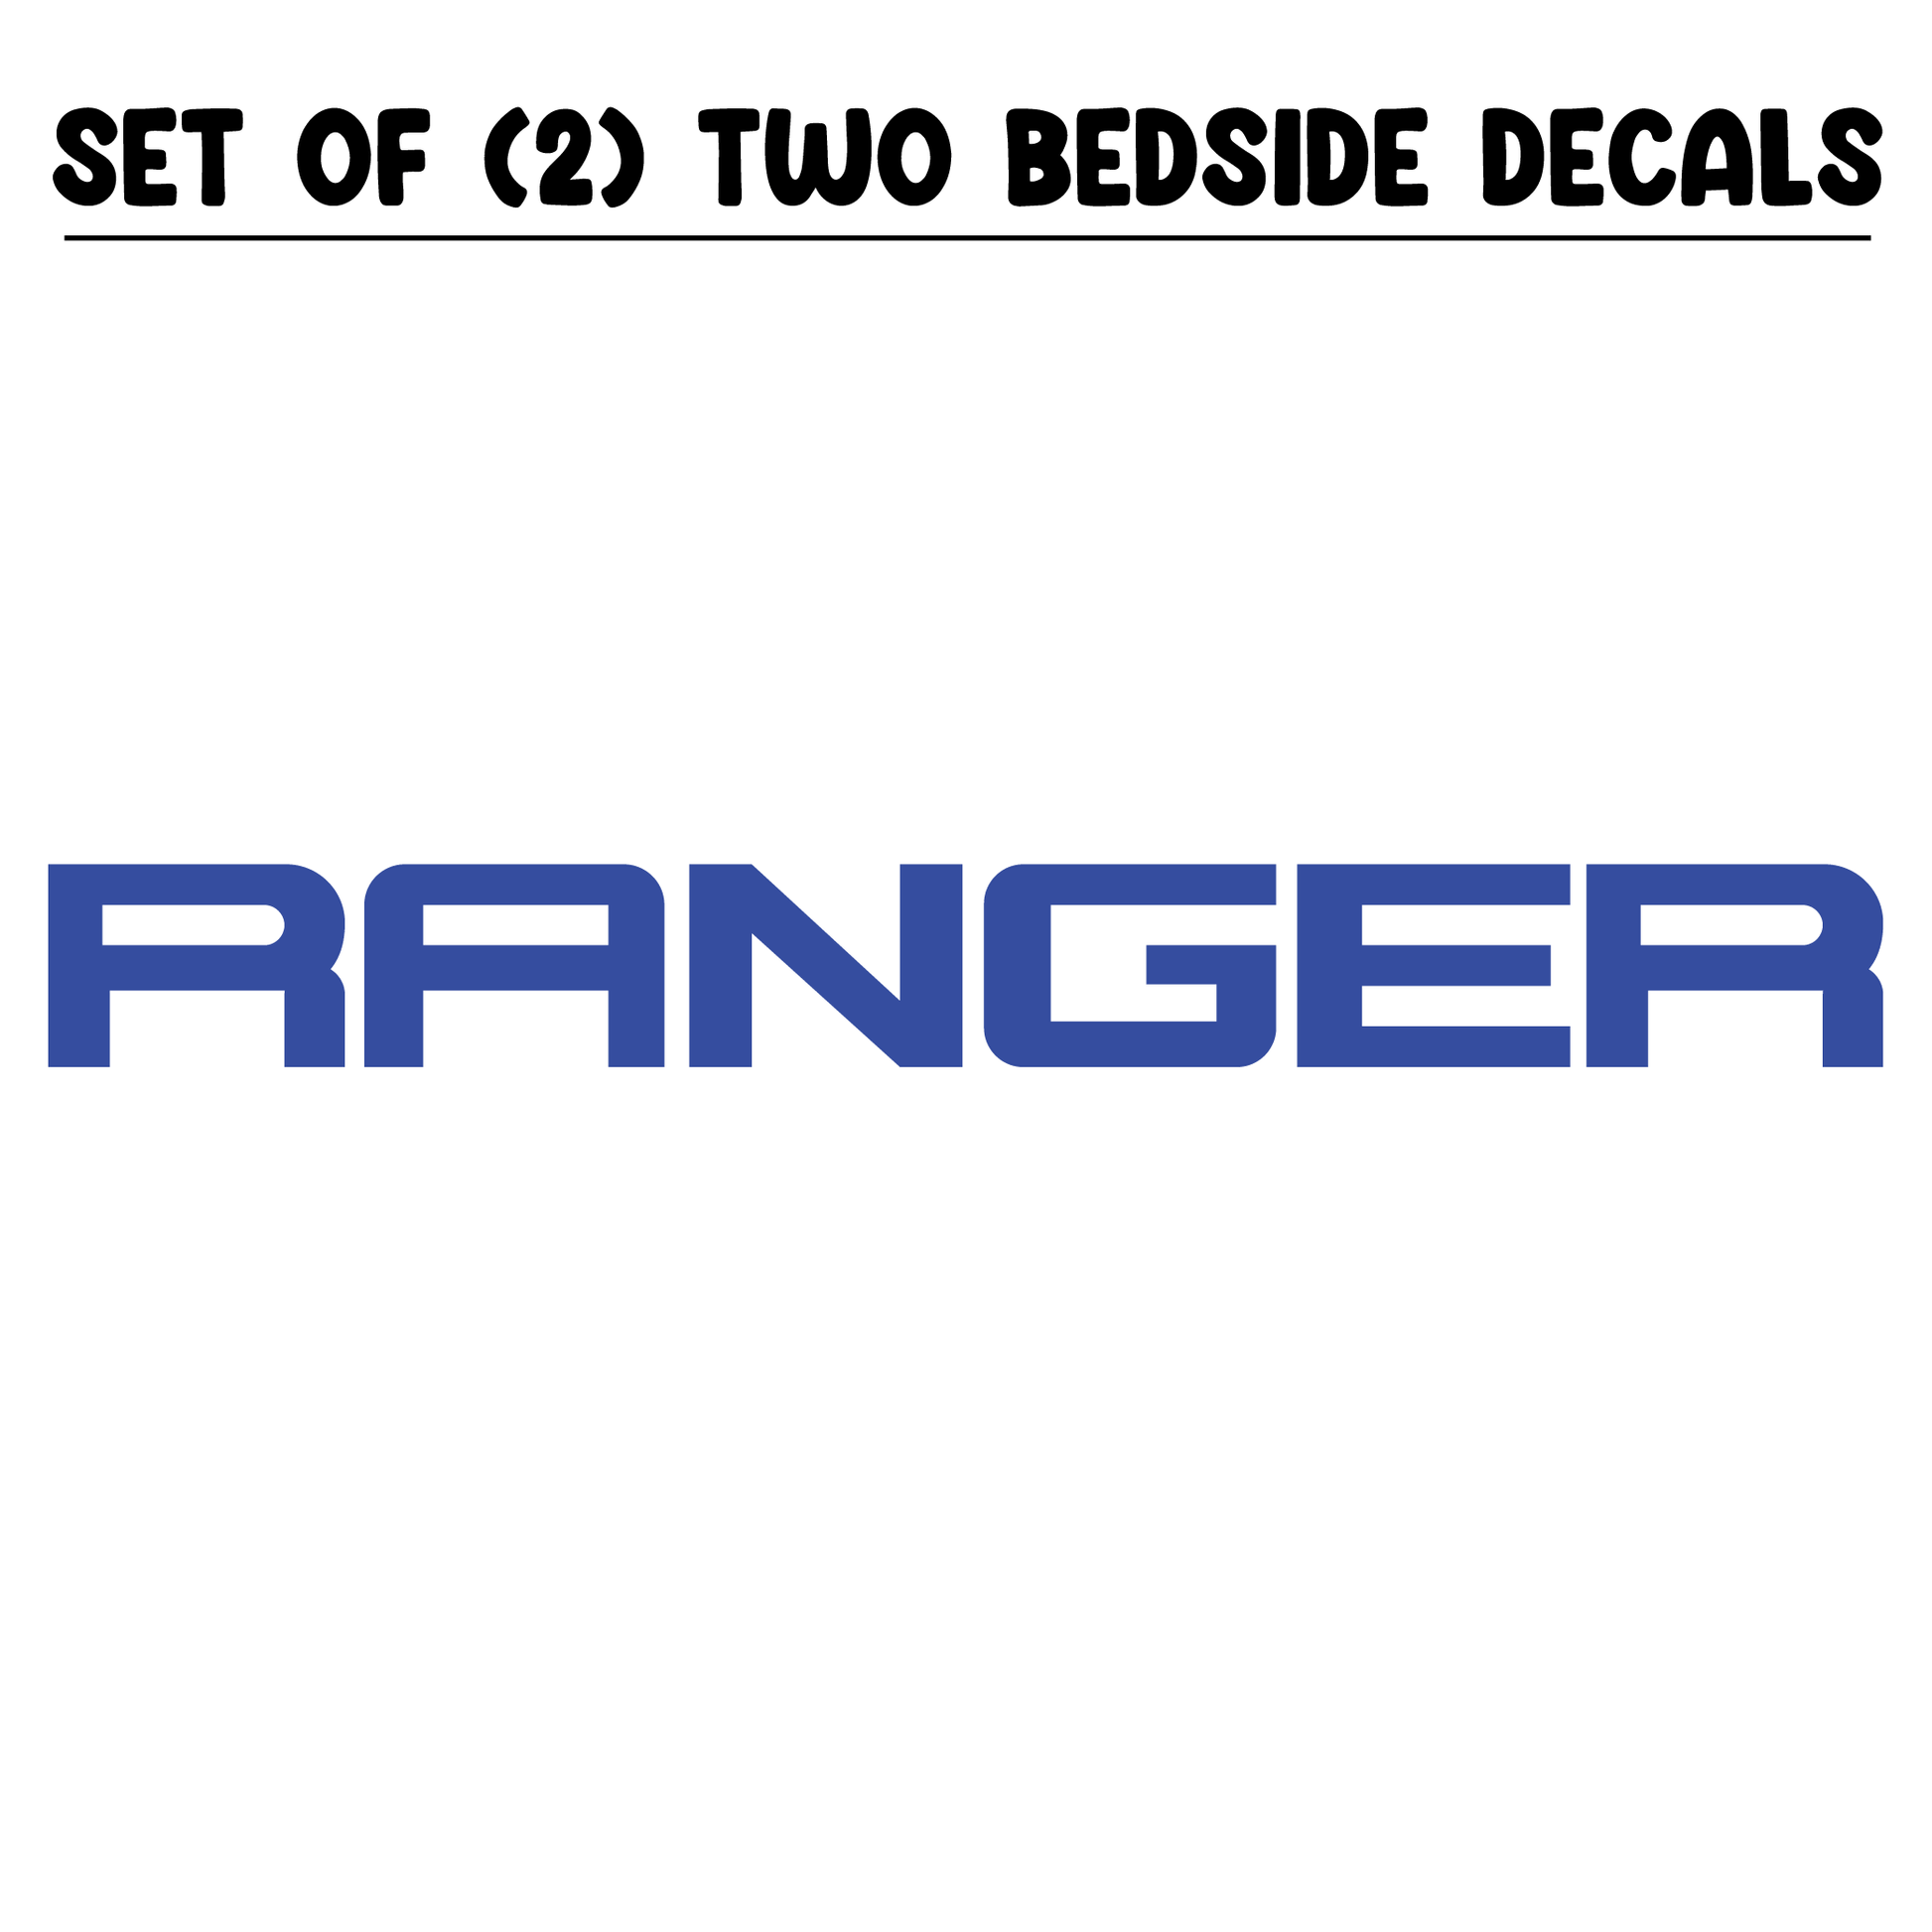 Shop Vinyl Design Ranger Trucks Replacement Bedside Decals #002 Vehicle decal 001 Brilliant Blue Gloss Shop Vinyl Design decals stickers